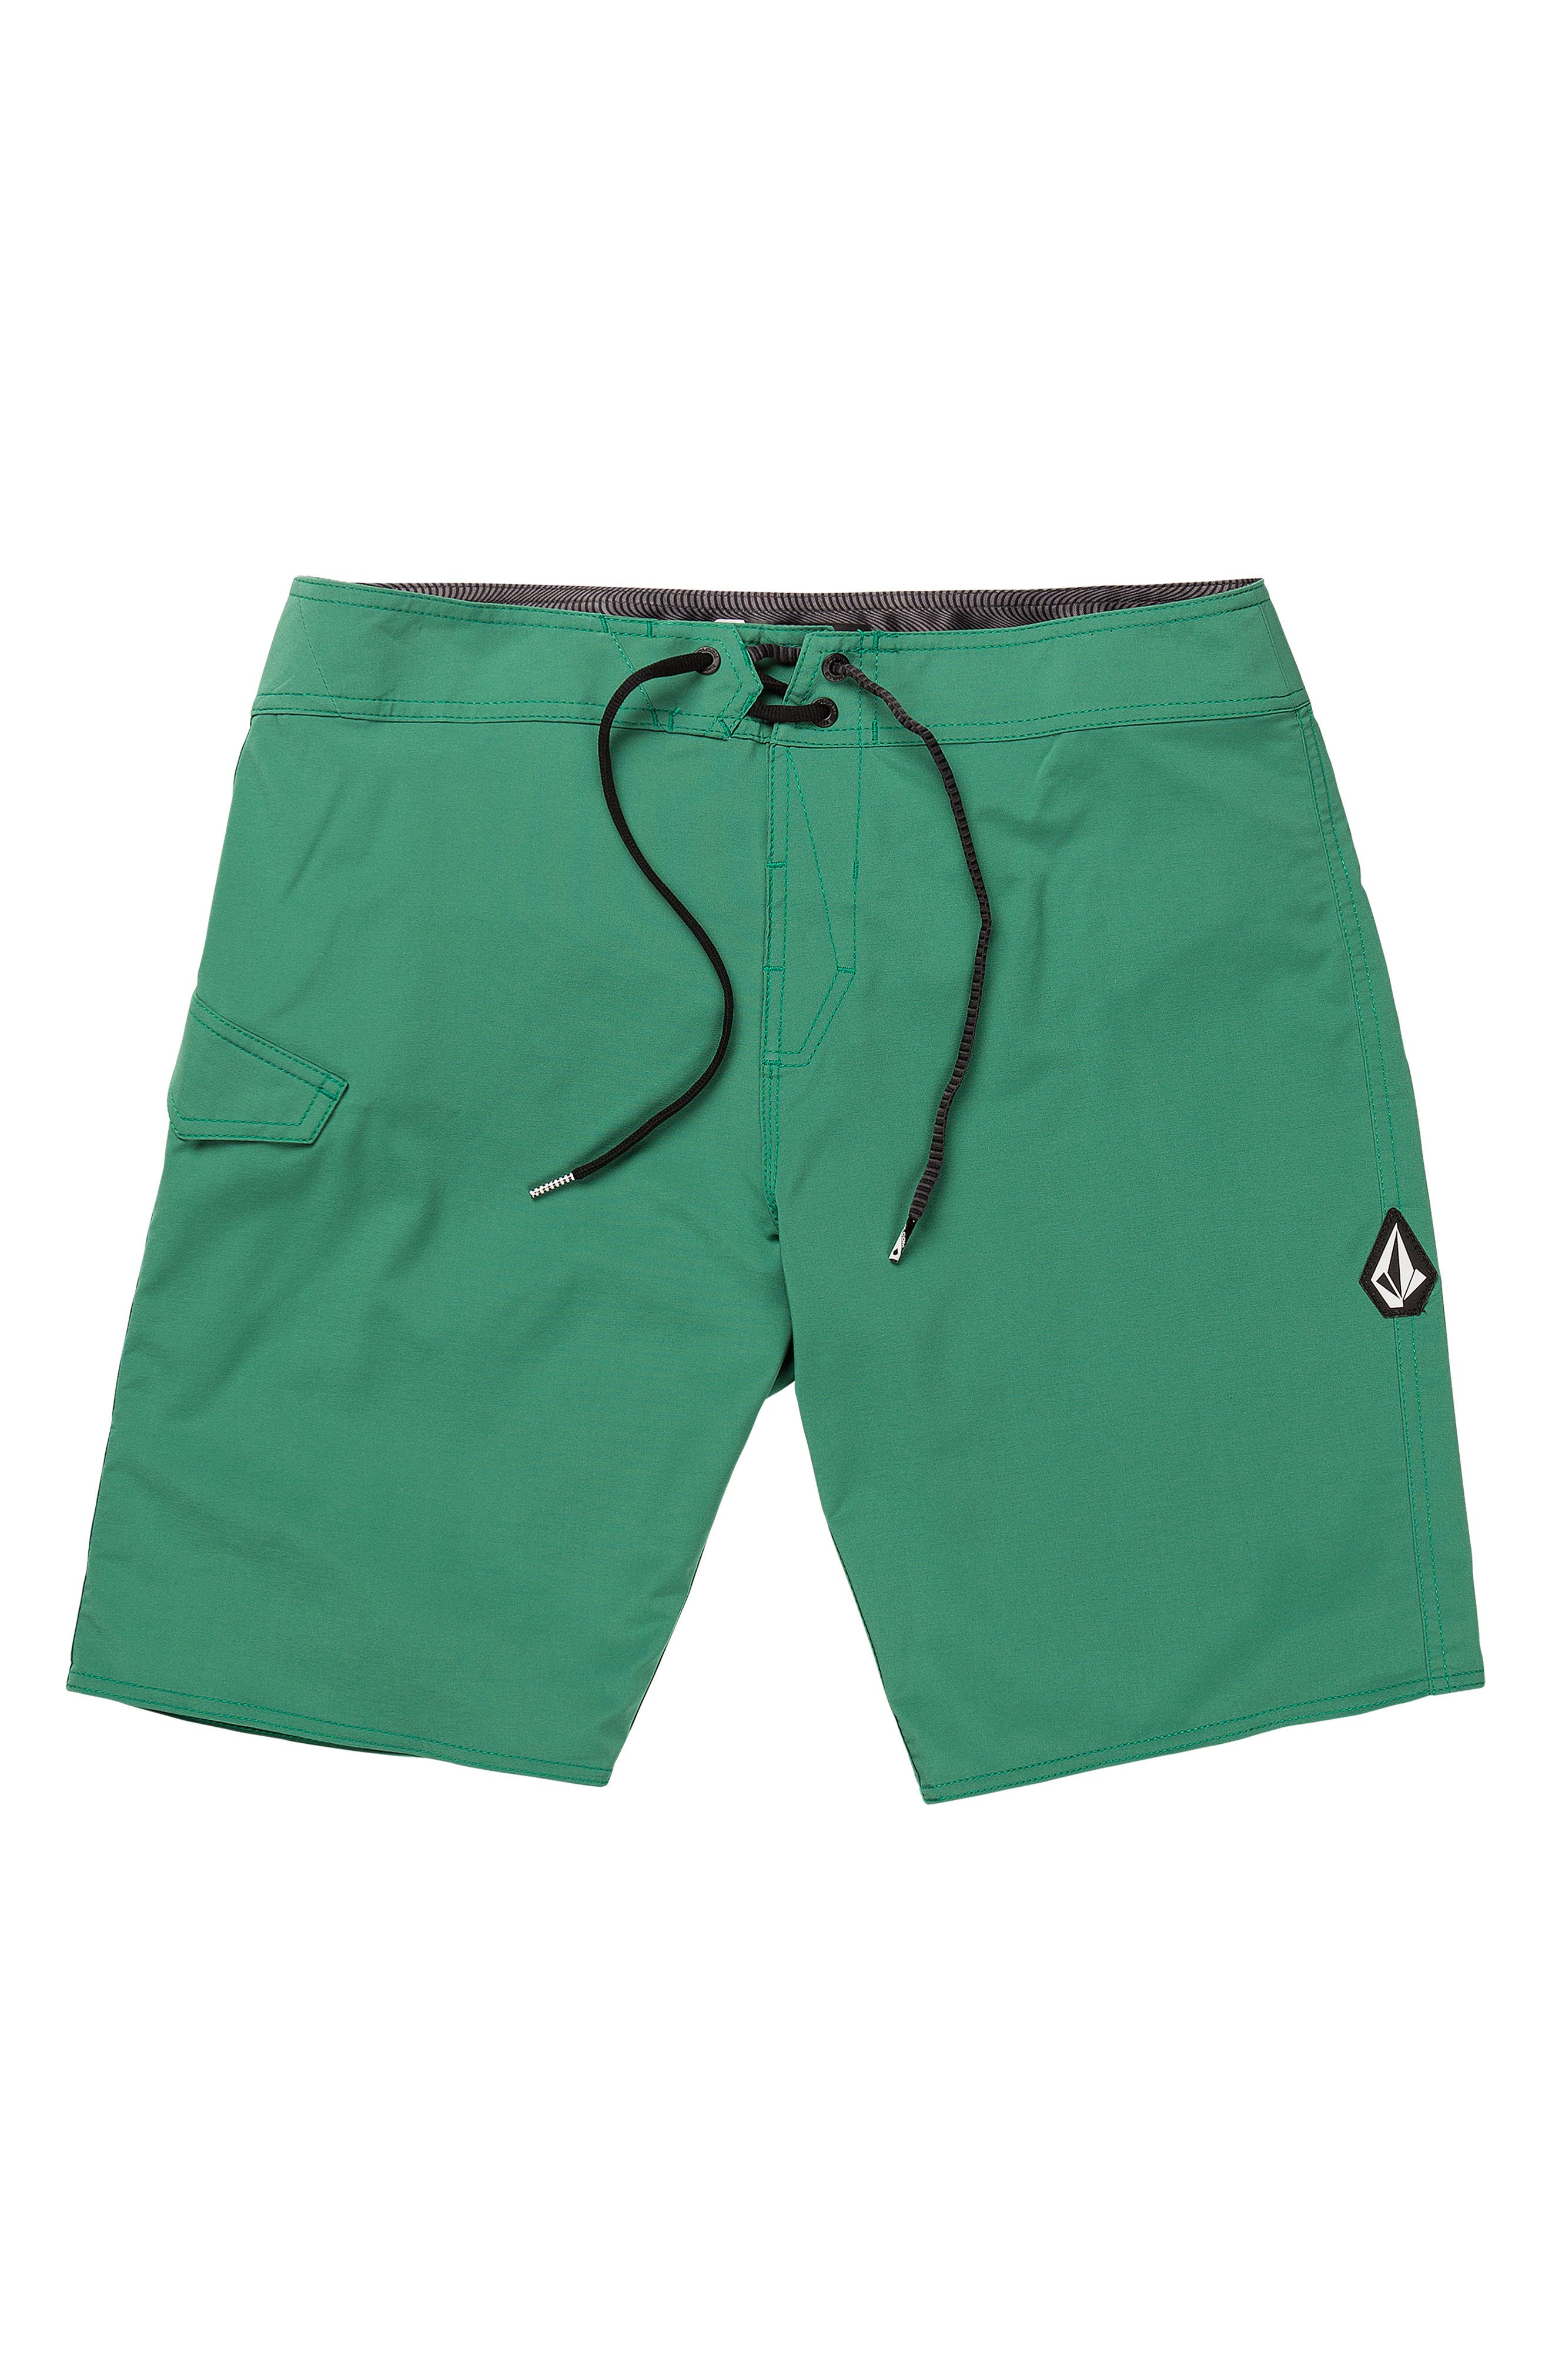 NEW VOLCOM board shorts  swim trunks Lido solid mod Poison Green sz 30 34 36 38 